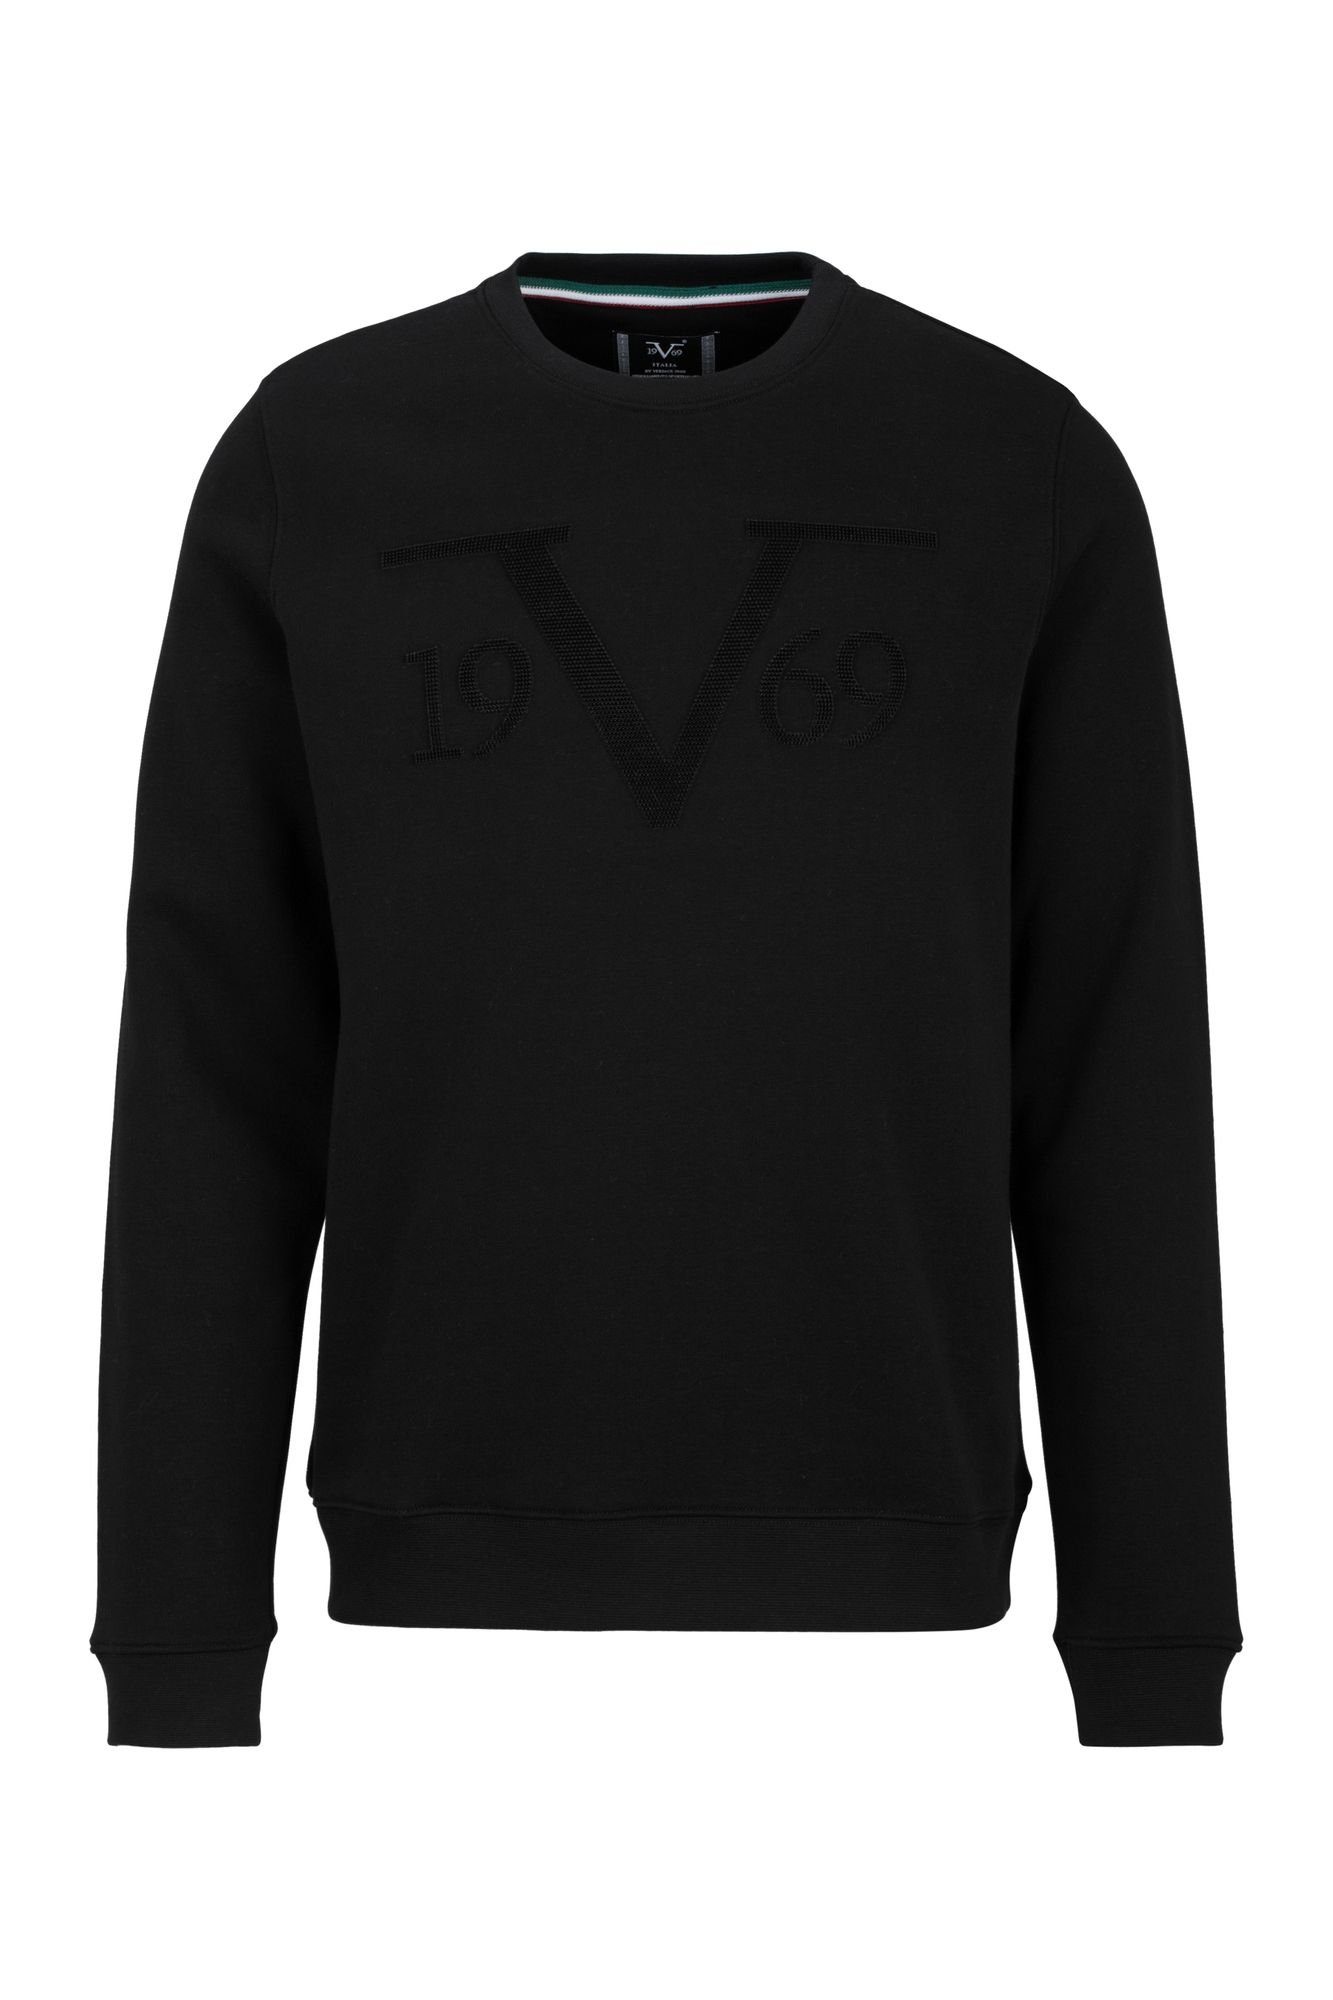 19V69 Italia by Versace Sweatshirt by Versace Sportivo SRL - Giorgio